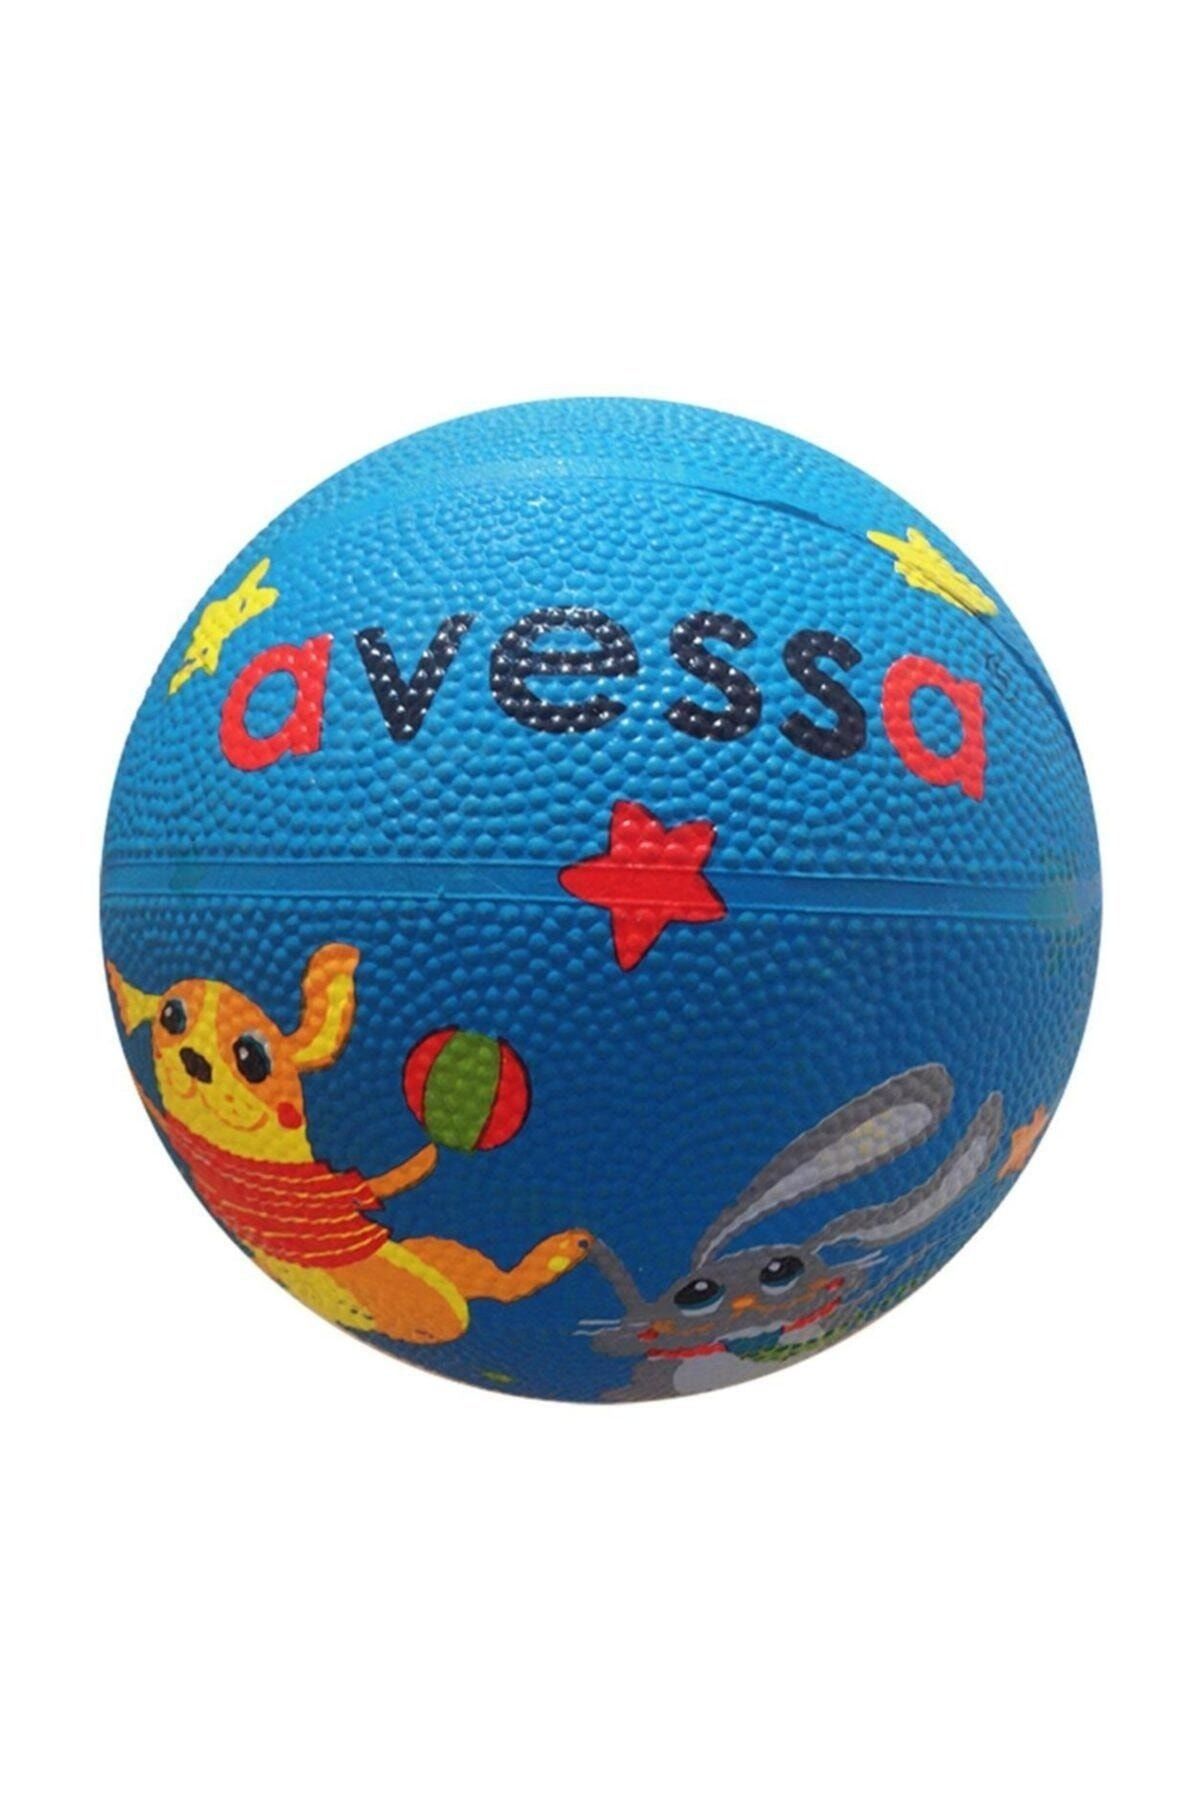 Avessa Mini Çocuk Basketbol Topu No1 Mavi